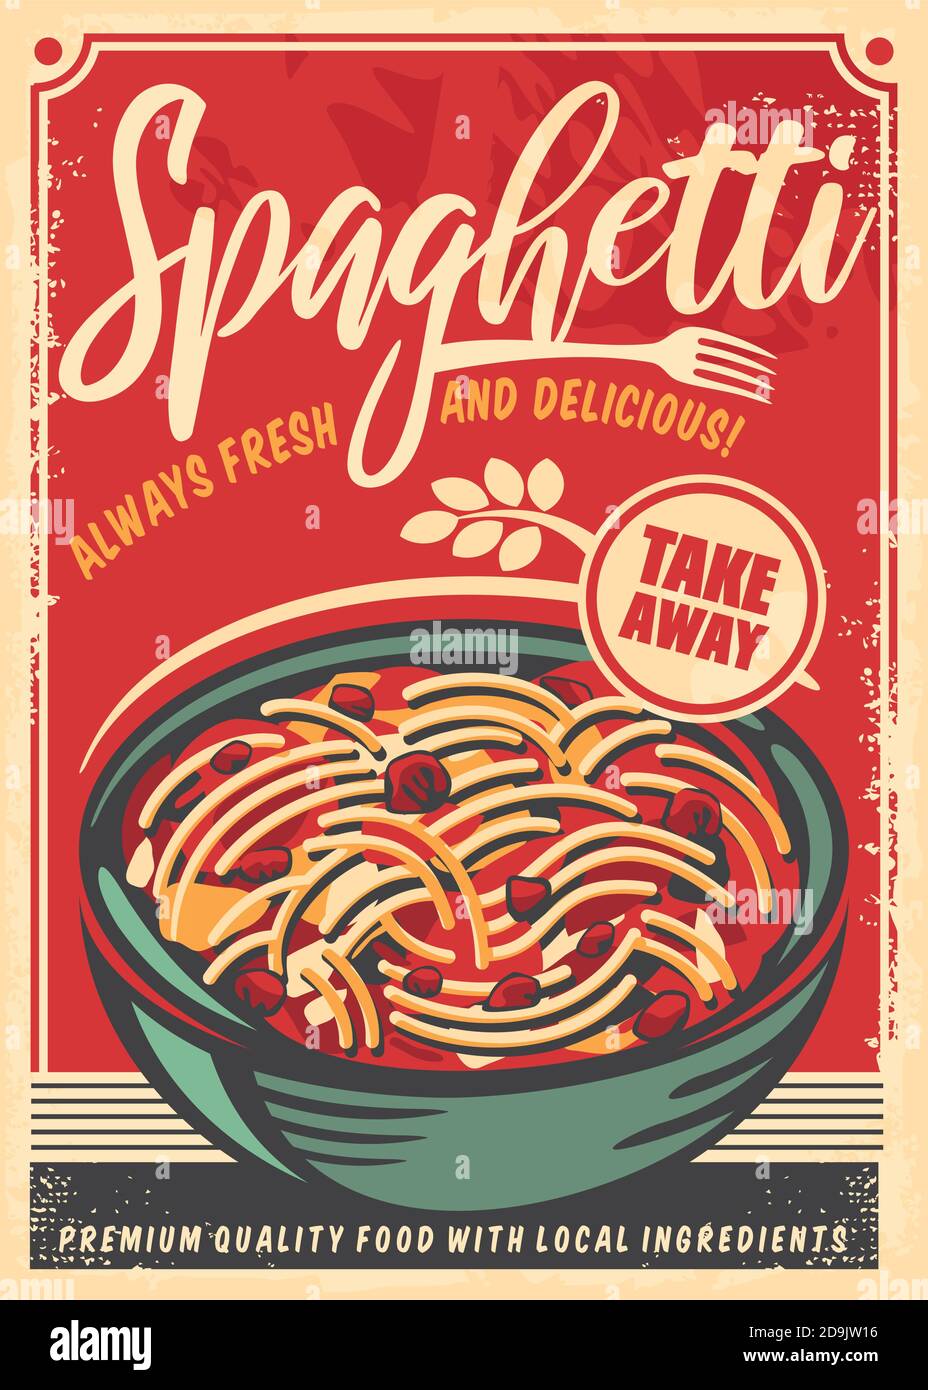 Spaghetti retro restaurant poster design template. Italian cuisine vector take away food illustration. Stock Vector